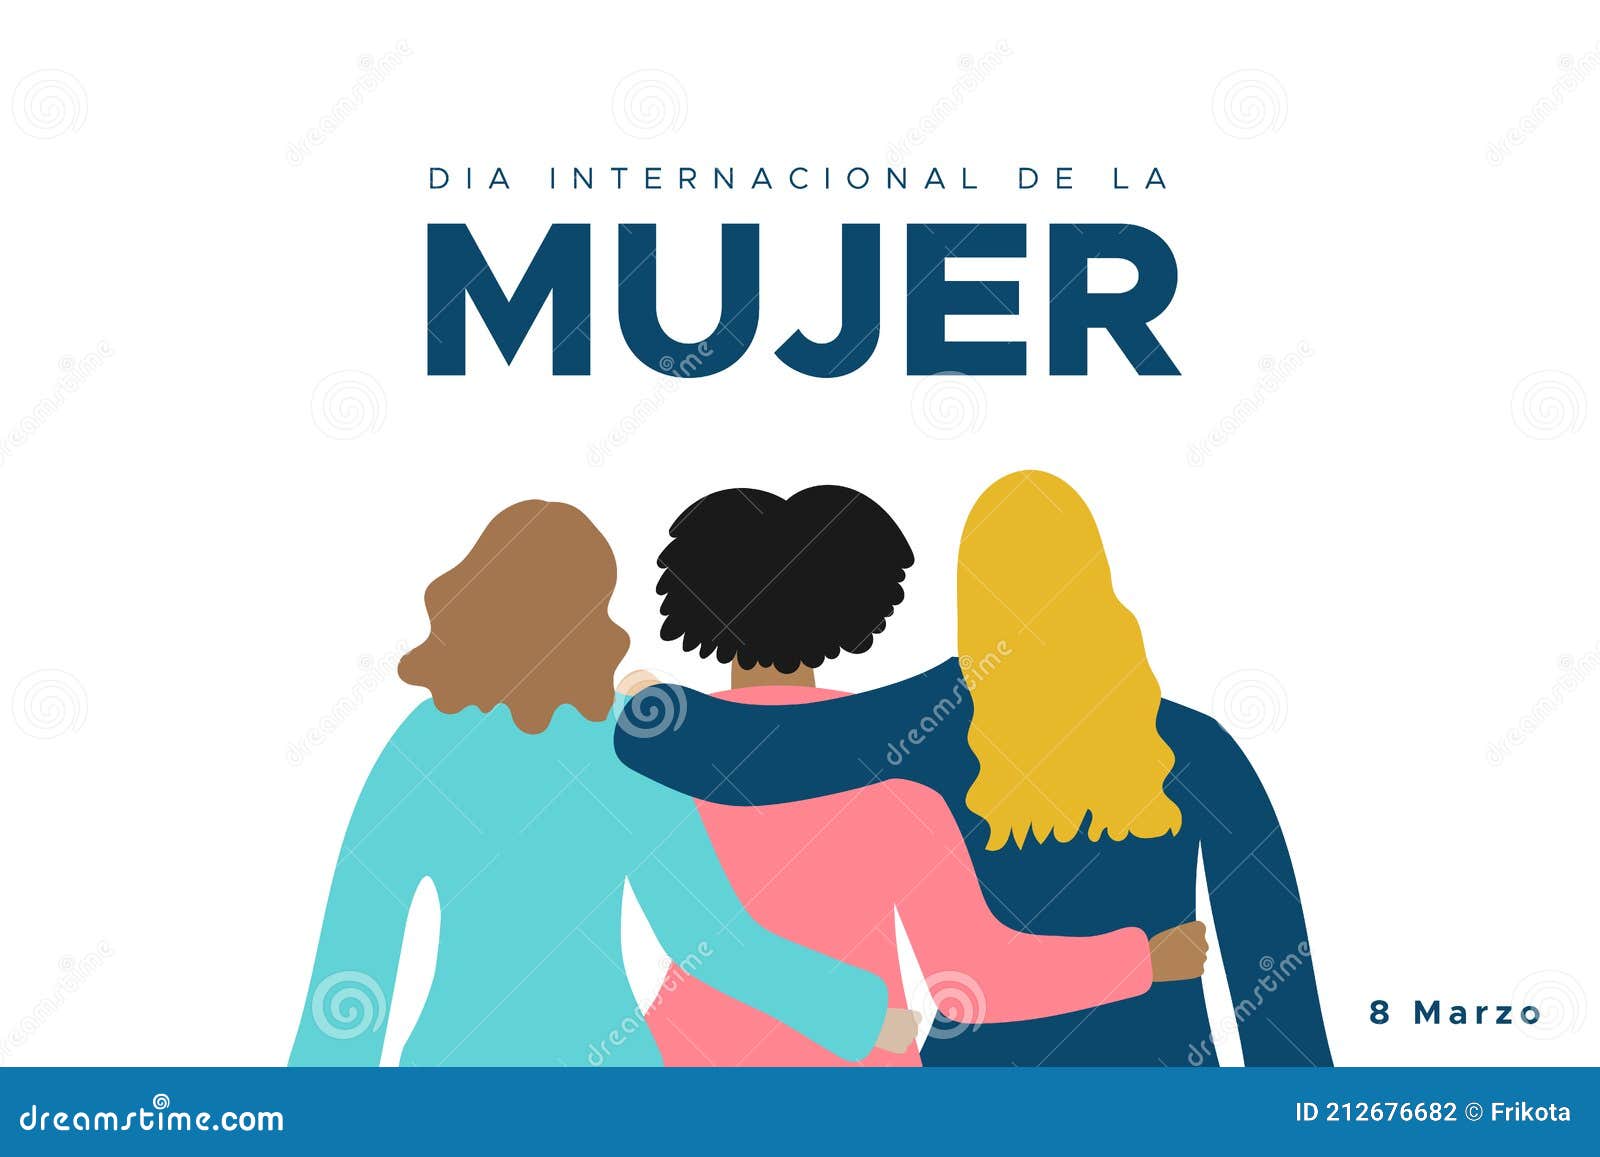 international women`s day. march 8. spanish. dia internacional de la mujer. 8 marzo. three women together hugging. concept of